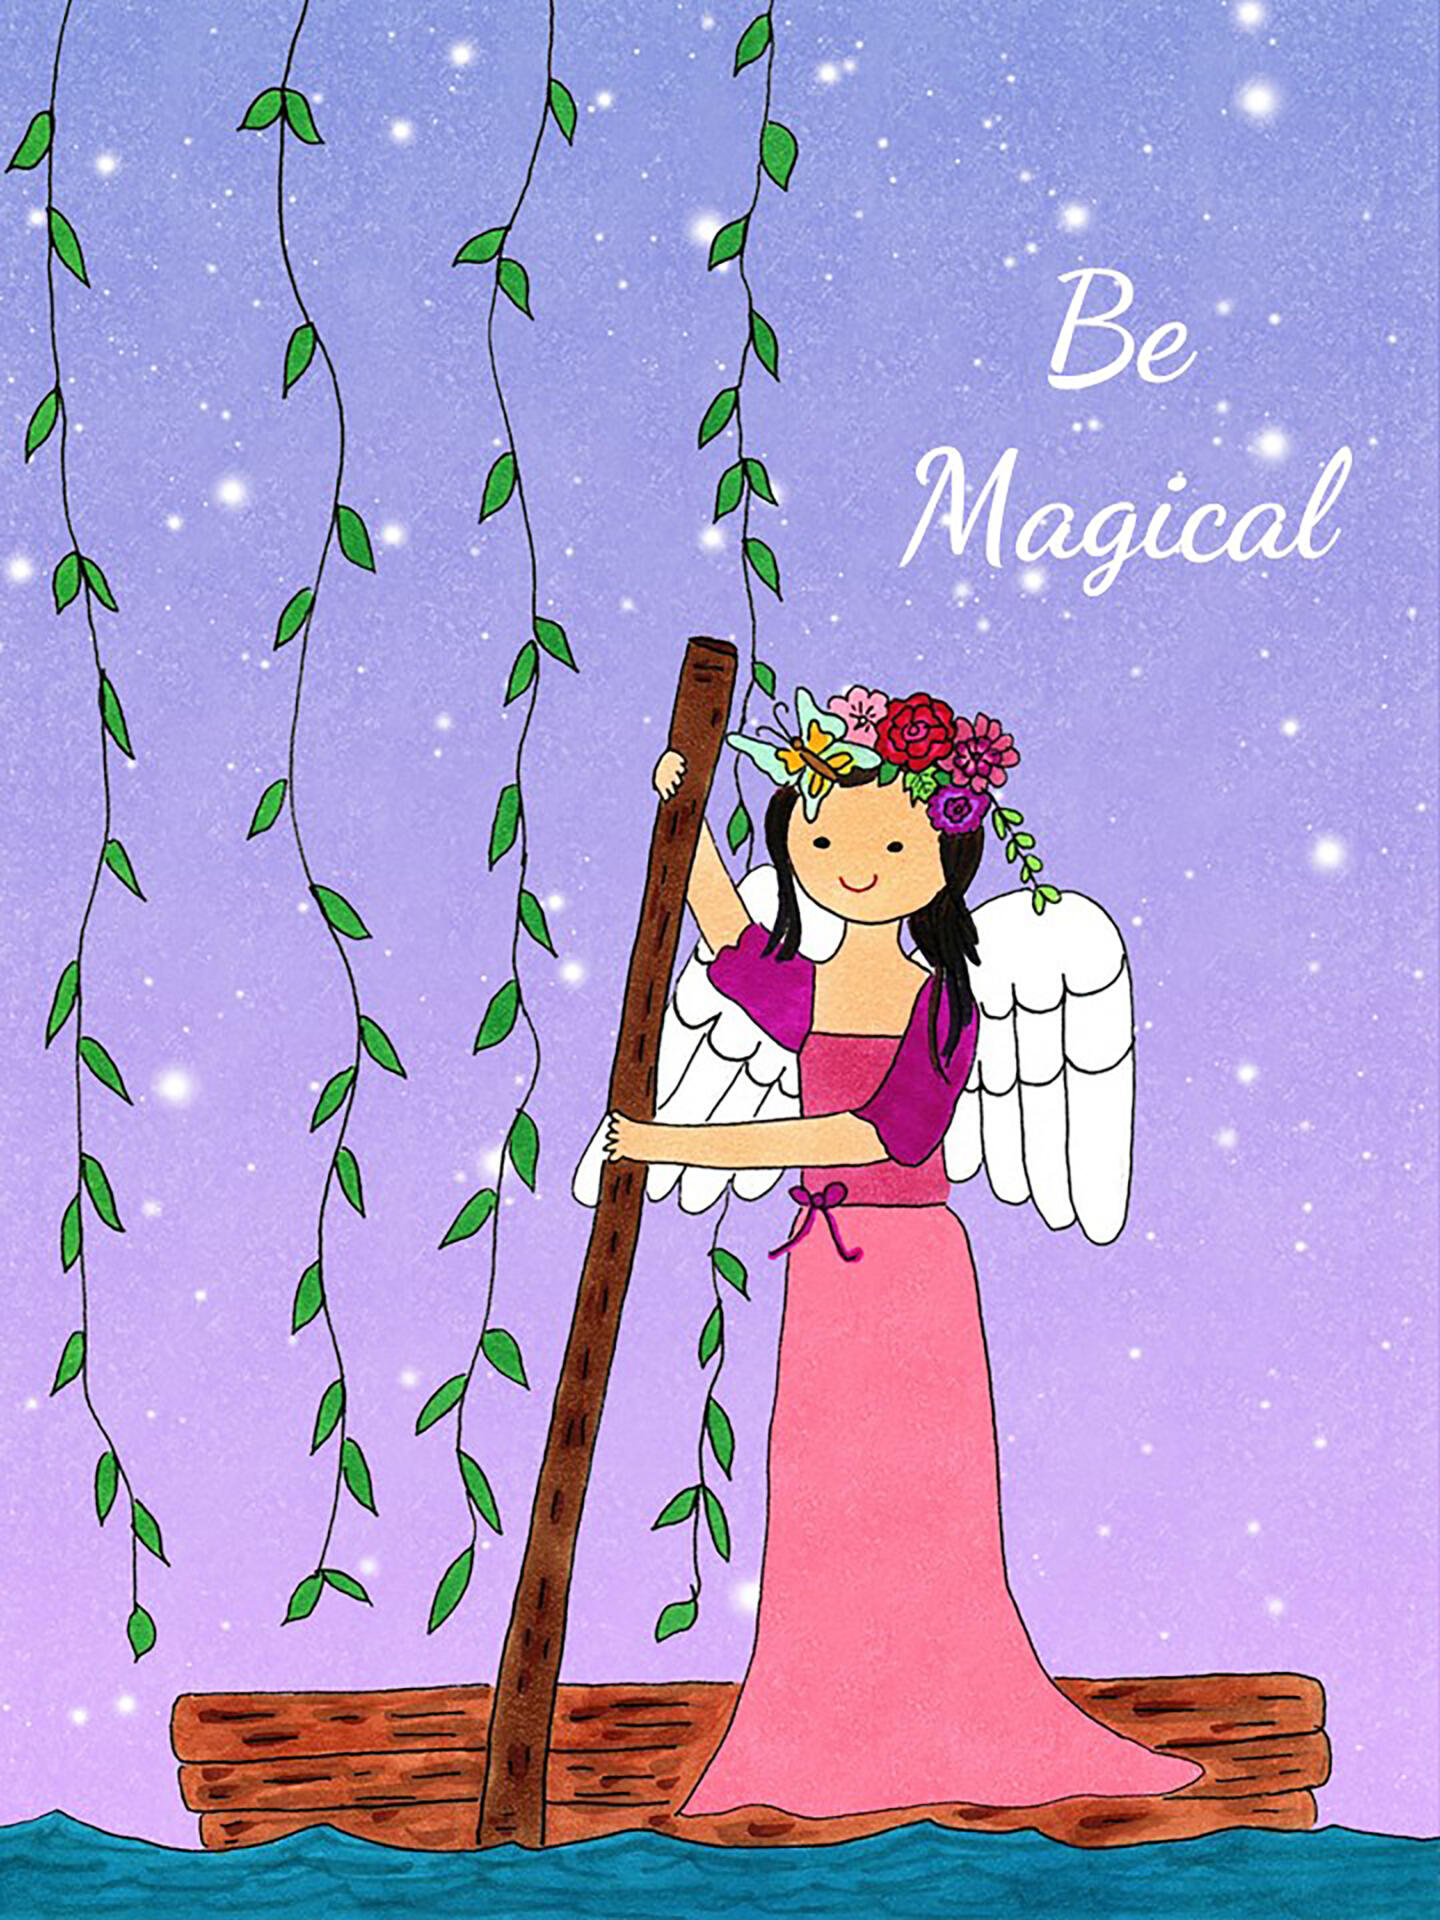 Be Magical eCard